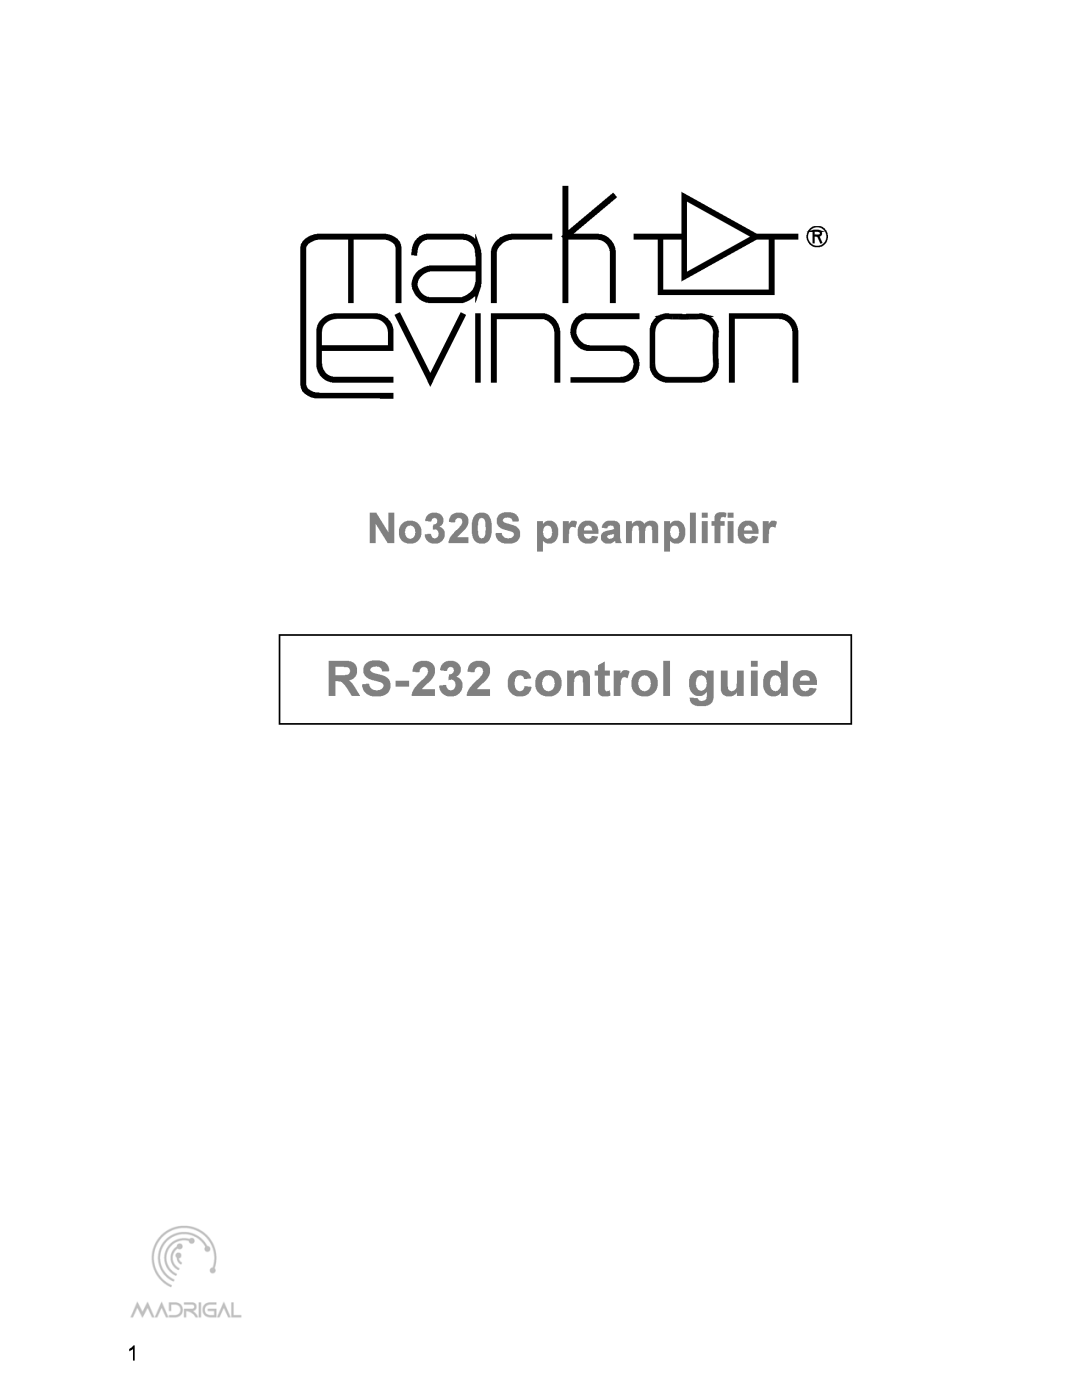 Mark Levinson manual RS-232control guide, No320S preamplifier 